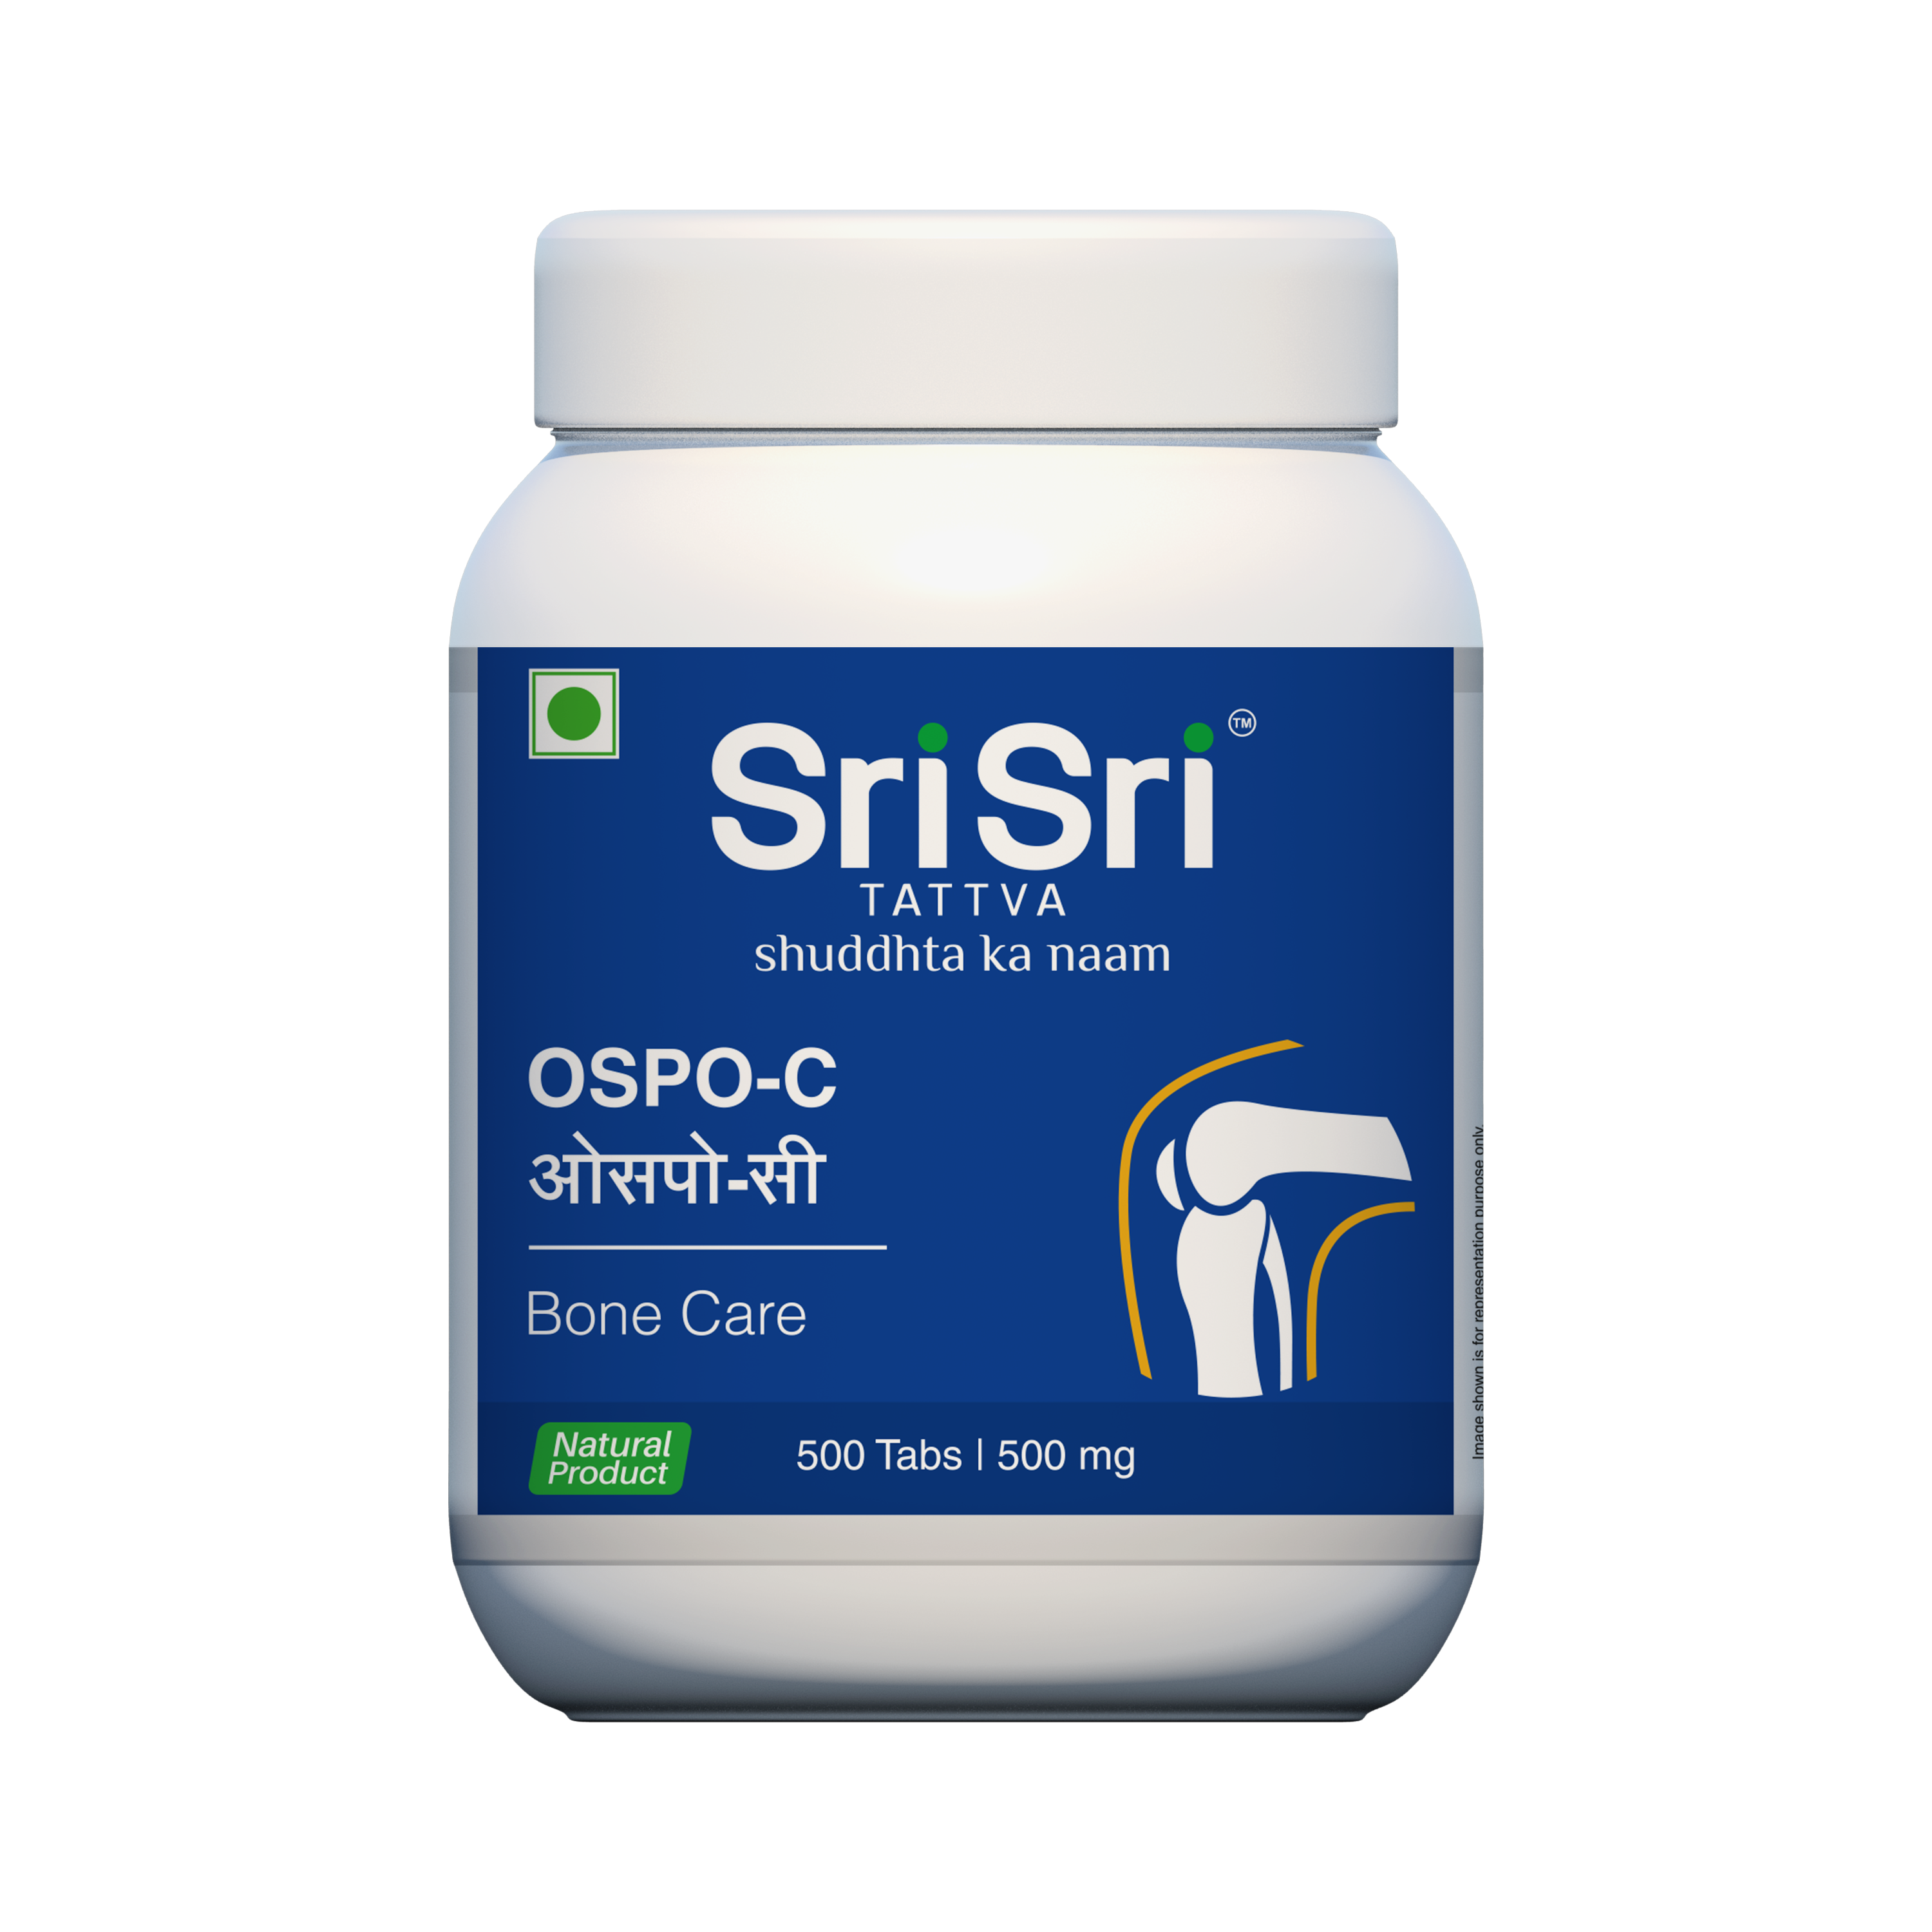 OSPO-C - For Stronger Bones | Prevent Bone Loss & Reverse Osteoporosis | Rice In Calcium | 500 Tabs, 500 mg